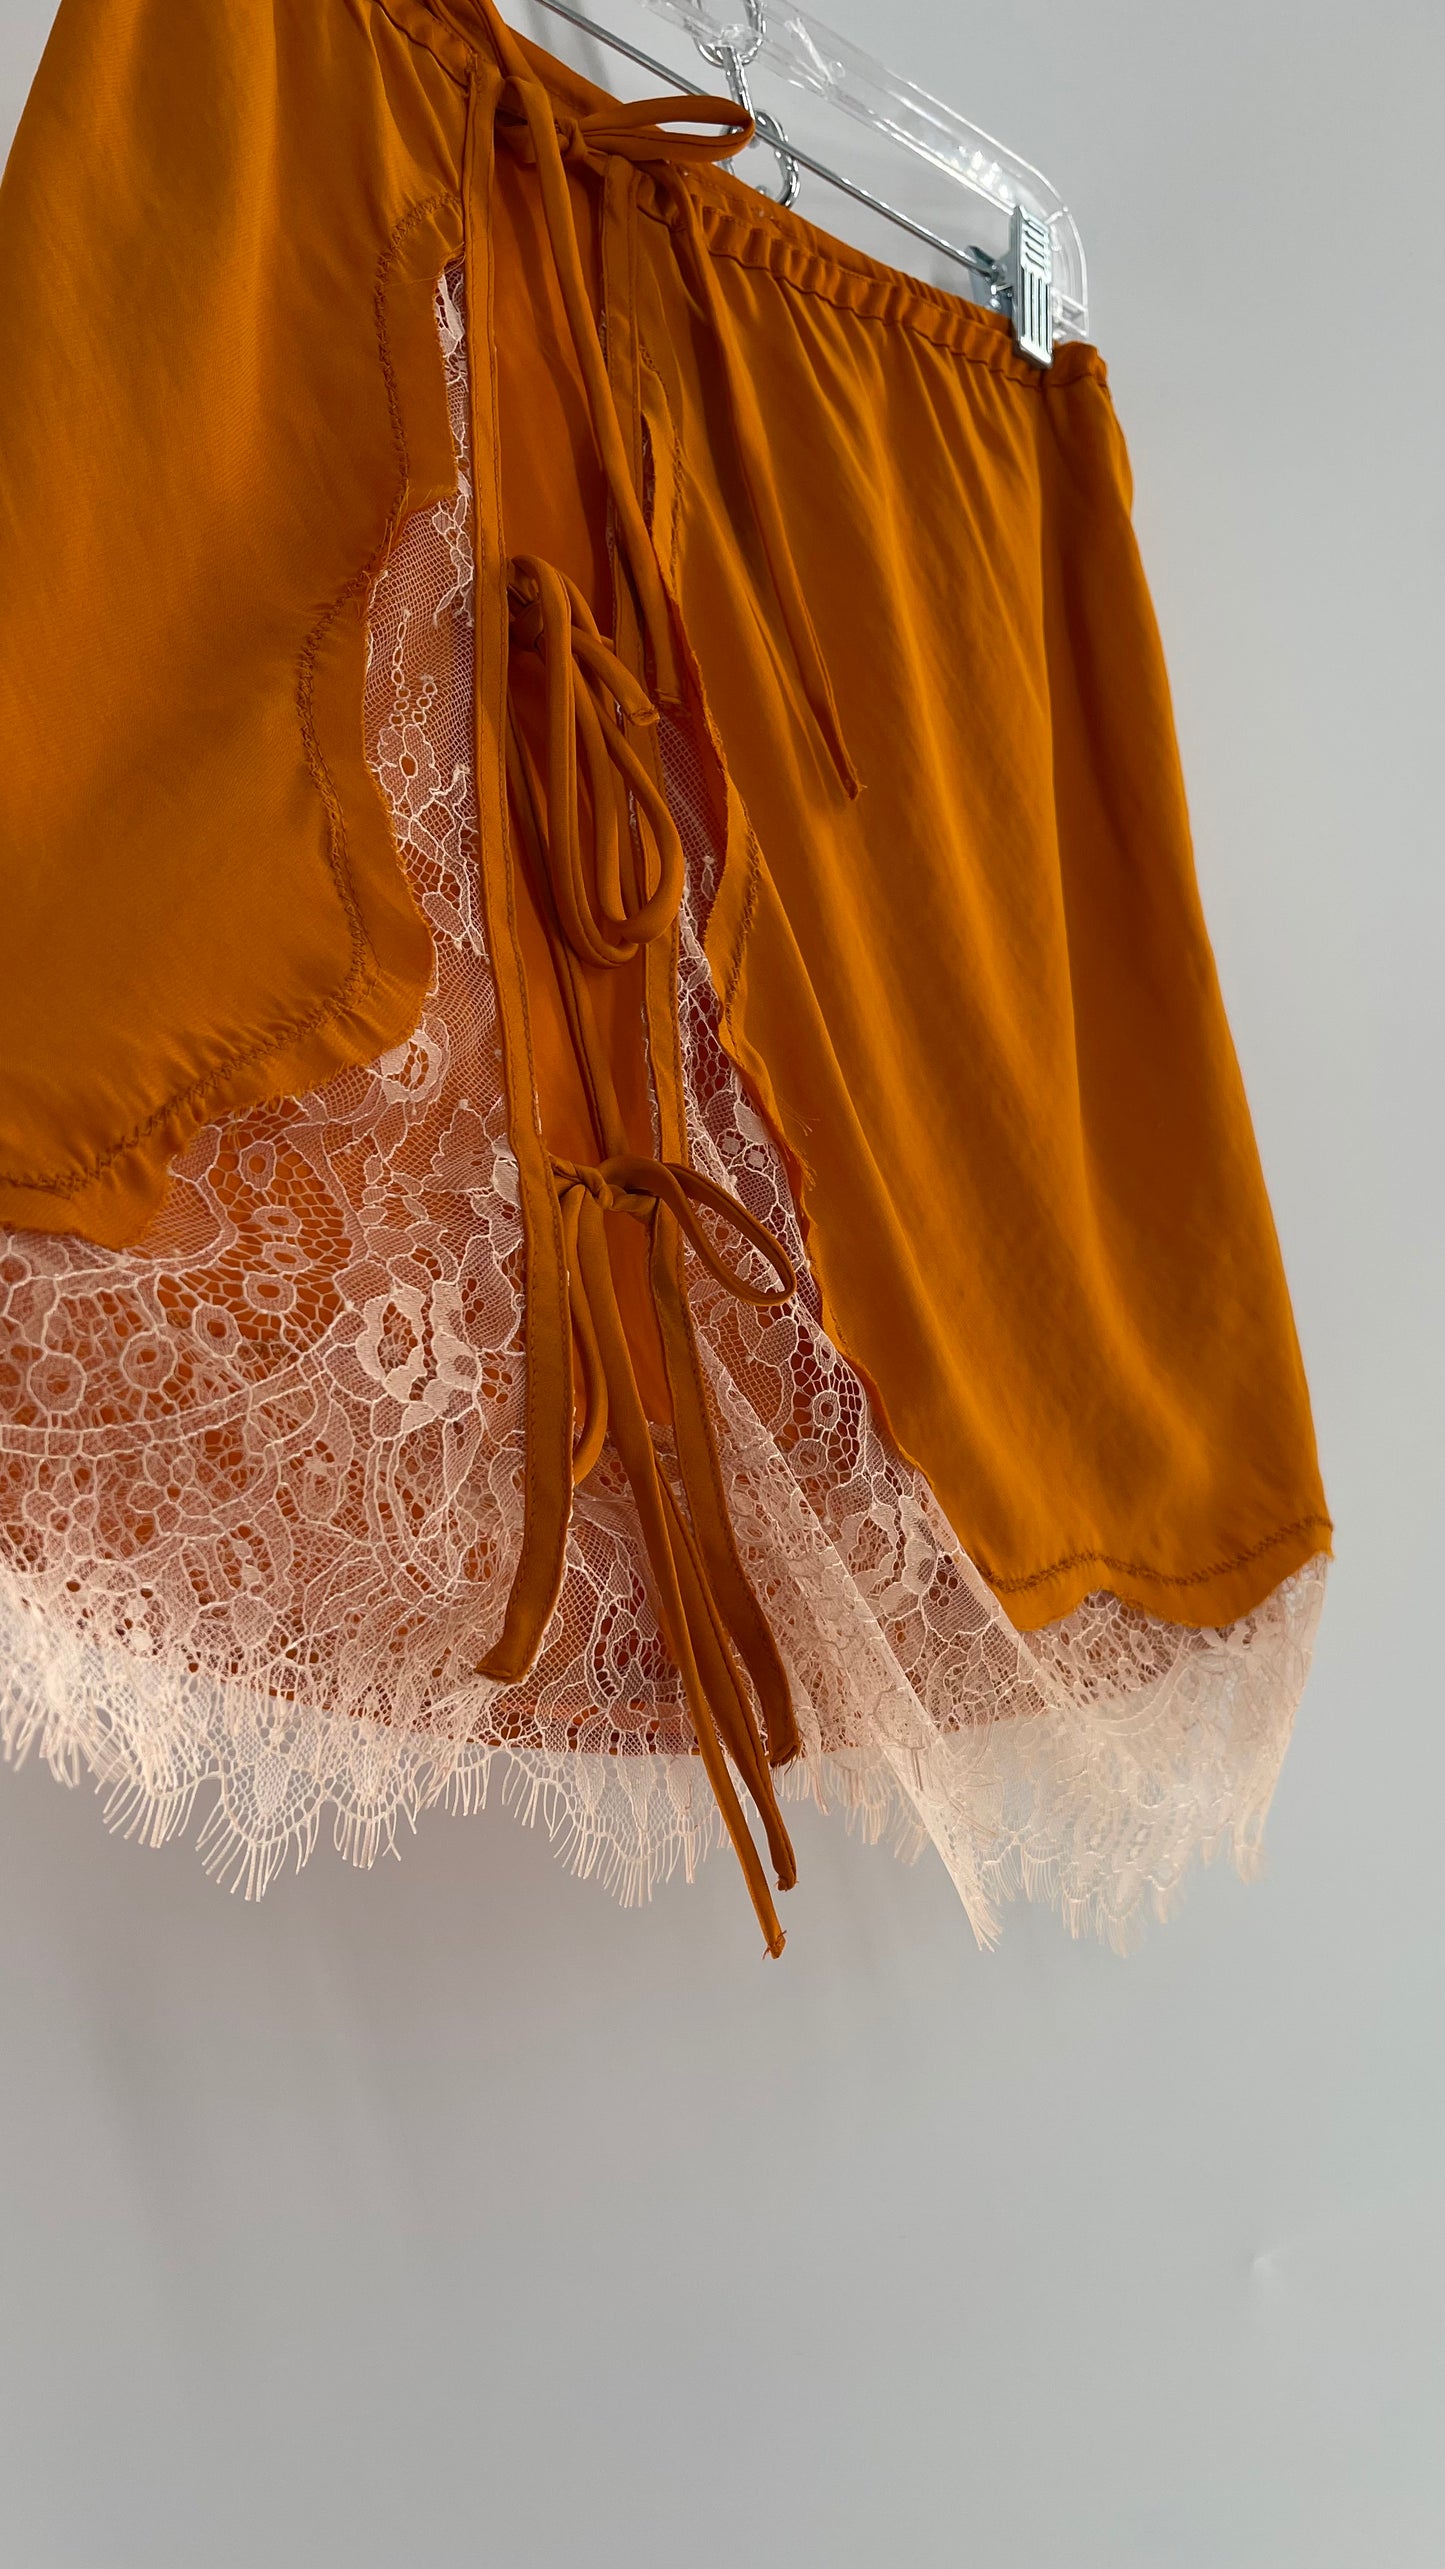 Free People Orange Lace Trim Silky Mini Skirt (Medium)